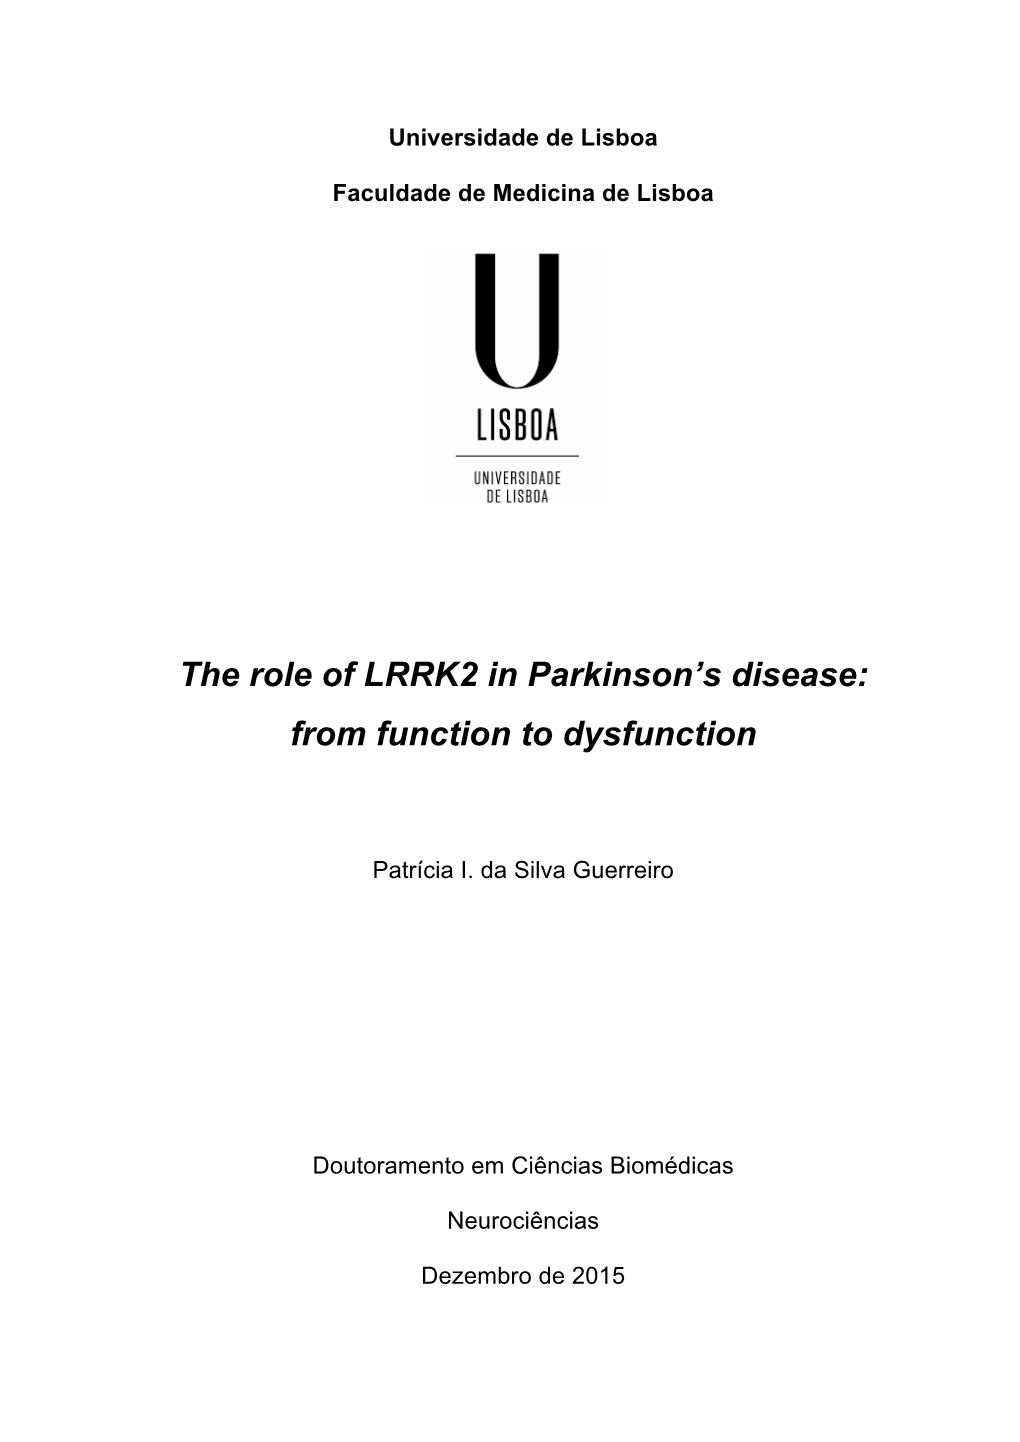 The Role of LRRK2 in Parkinson's Disease